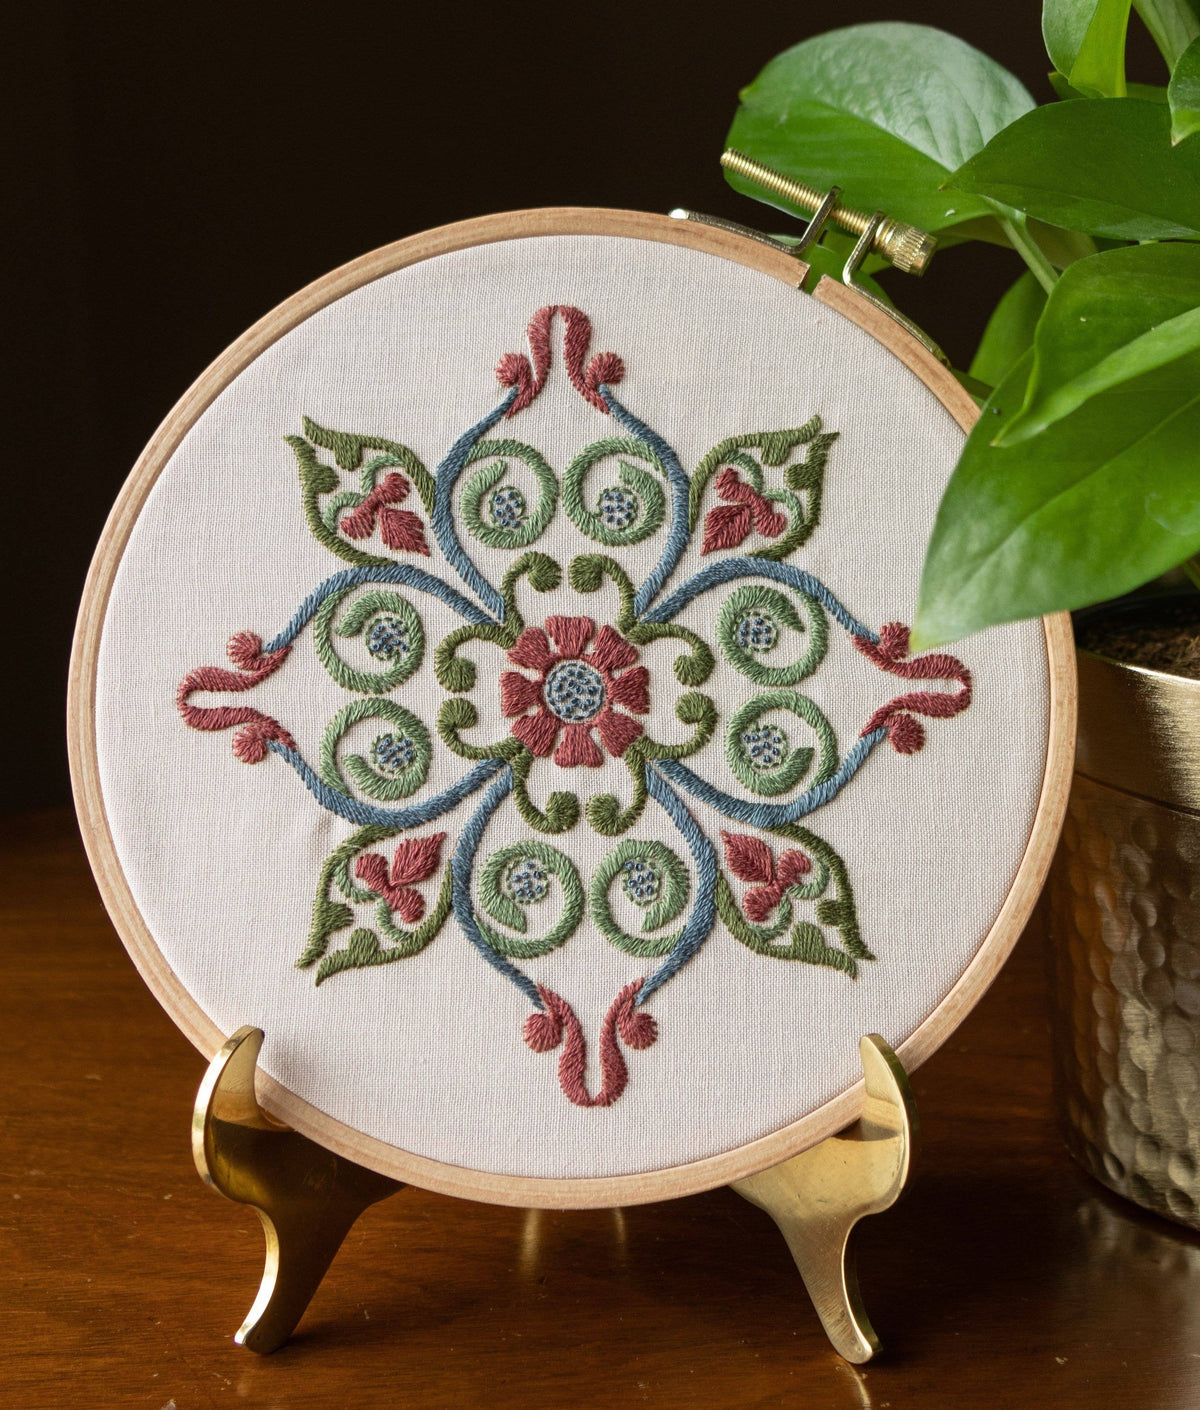 Georgian Rose Embroidery kit by Avlea Folk Embroidery